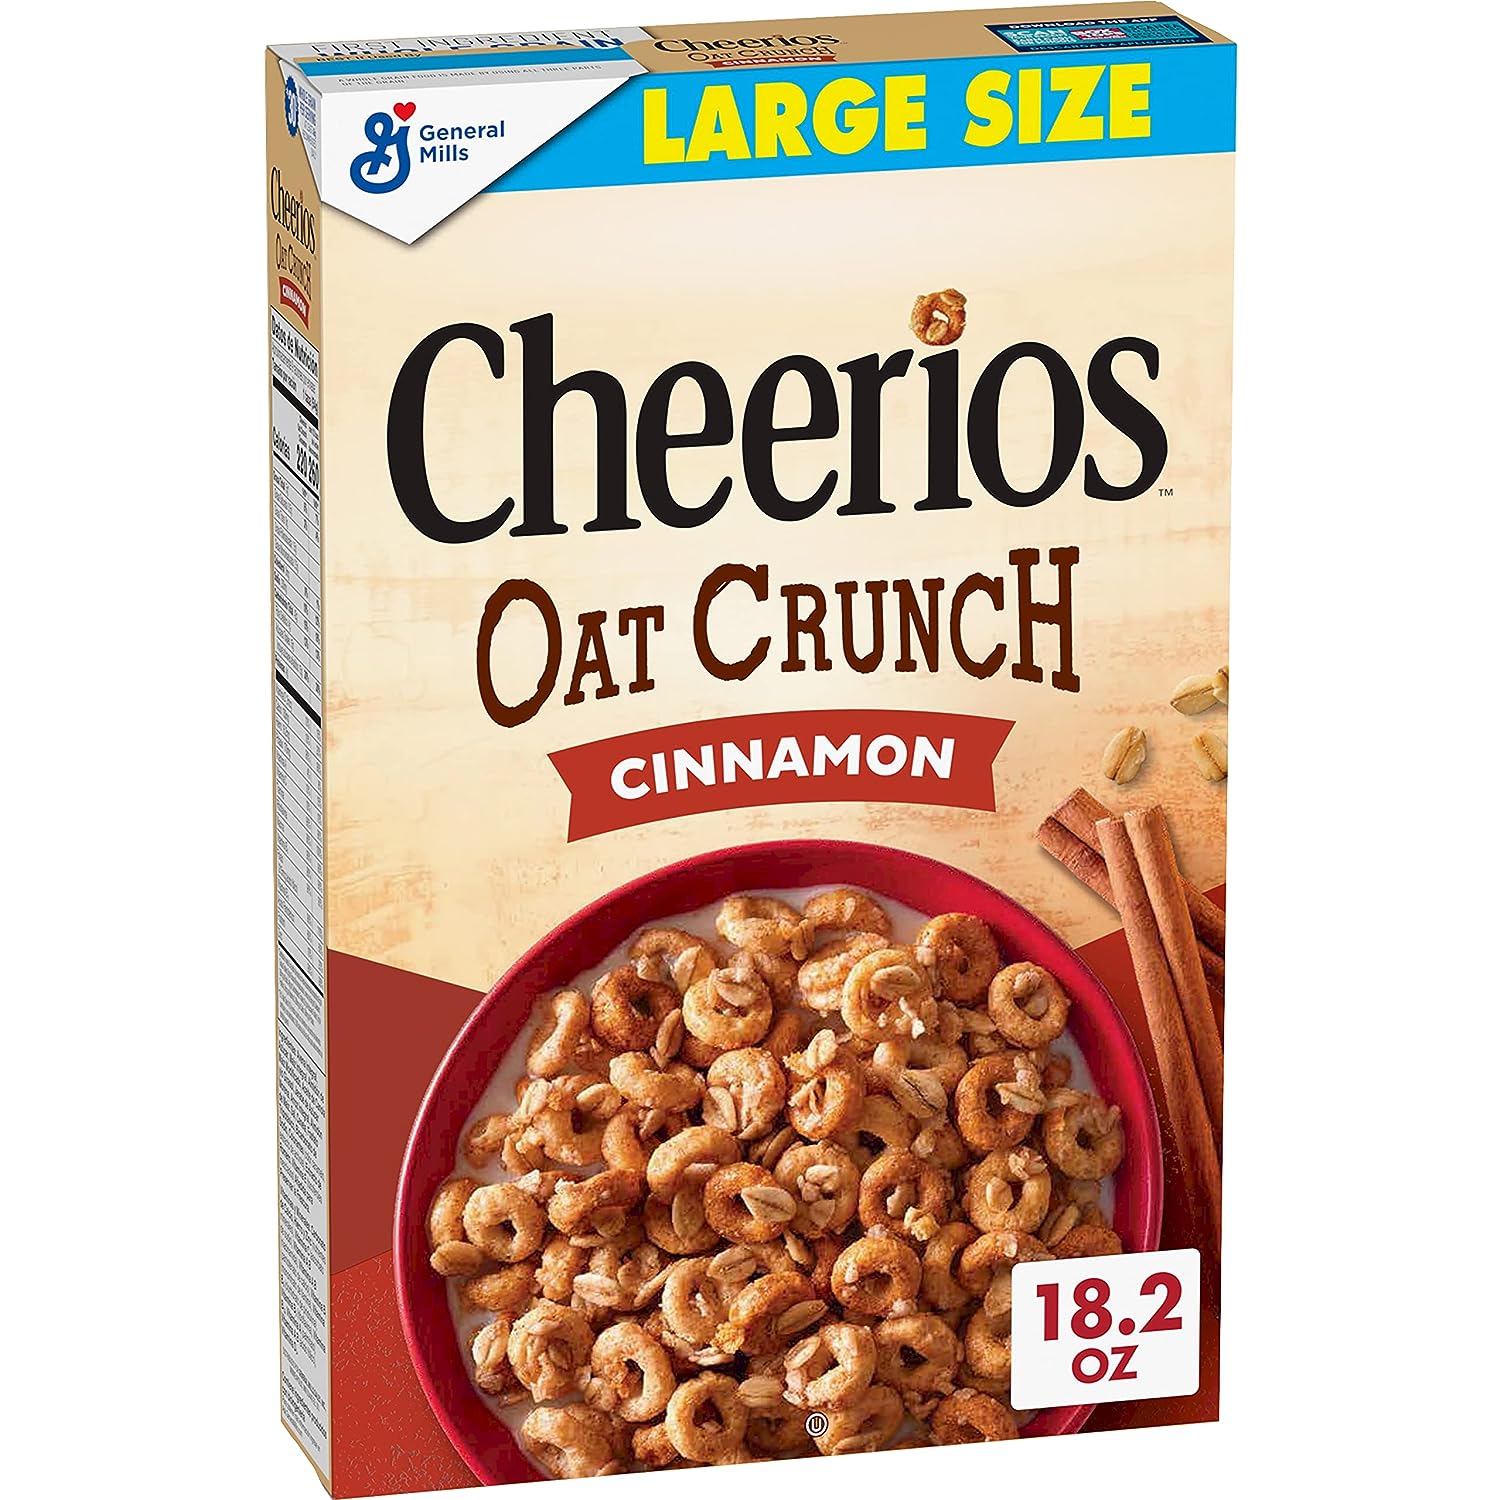 Cheerios Oat Crunch Cinammon Oat Breakfast Cereal, Large Size, 18.2 oz - $2.49